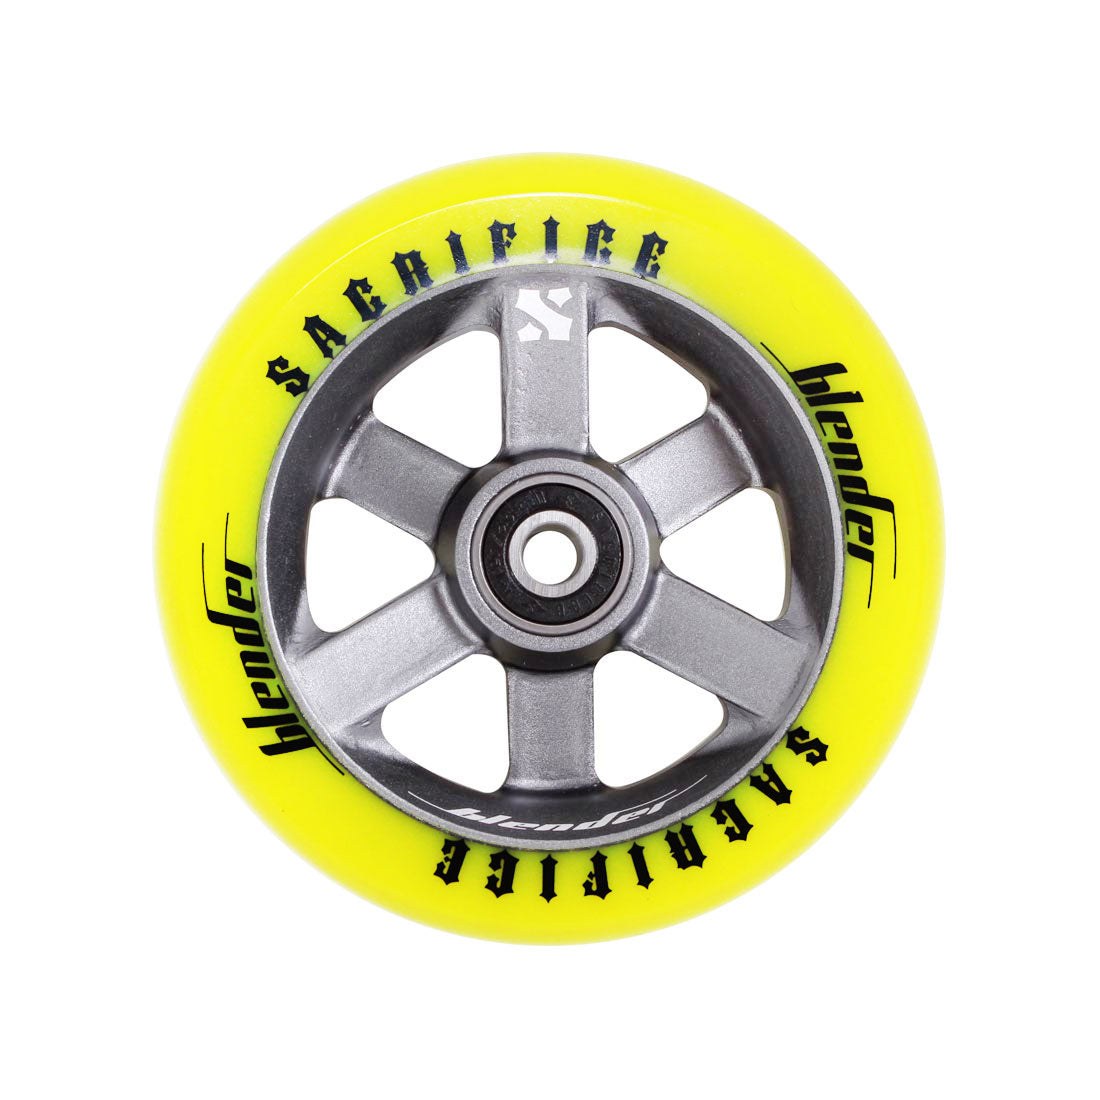 Sacrifice Blenders 110 Wheel - Lime/Titanium Scooter Wheels